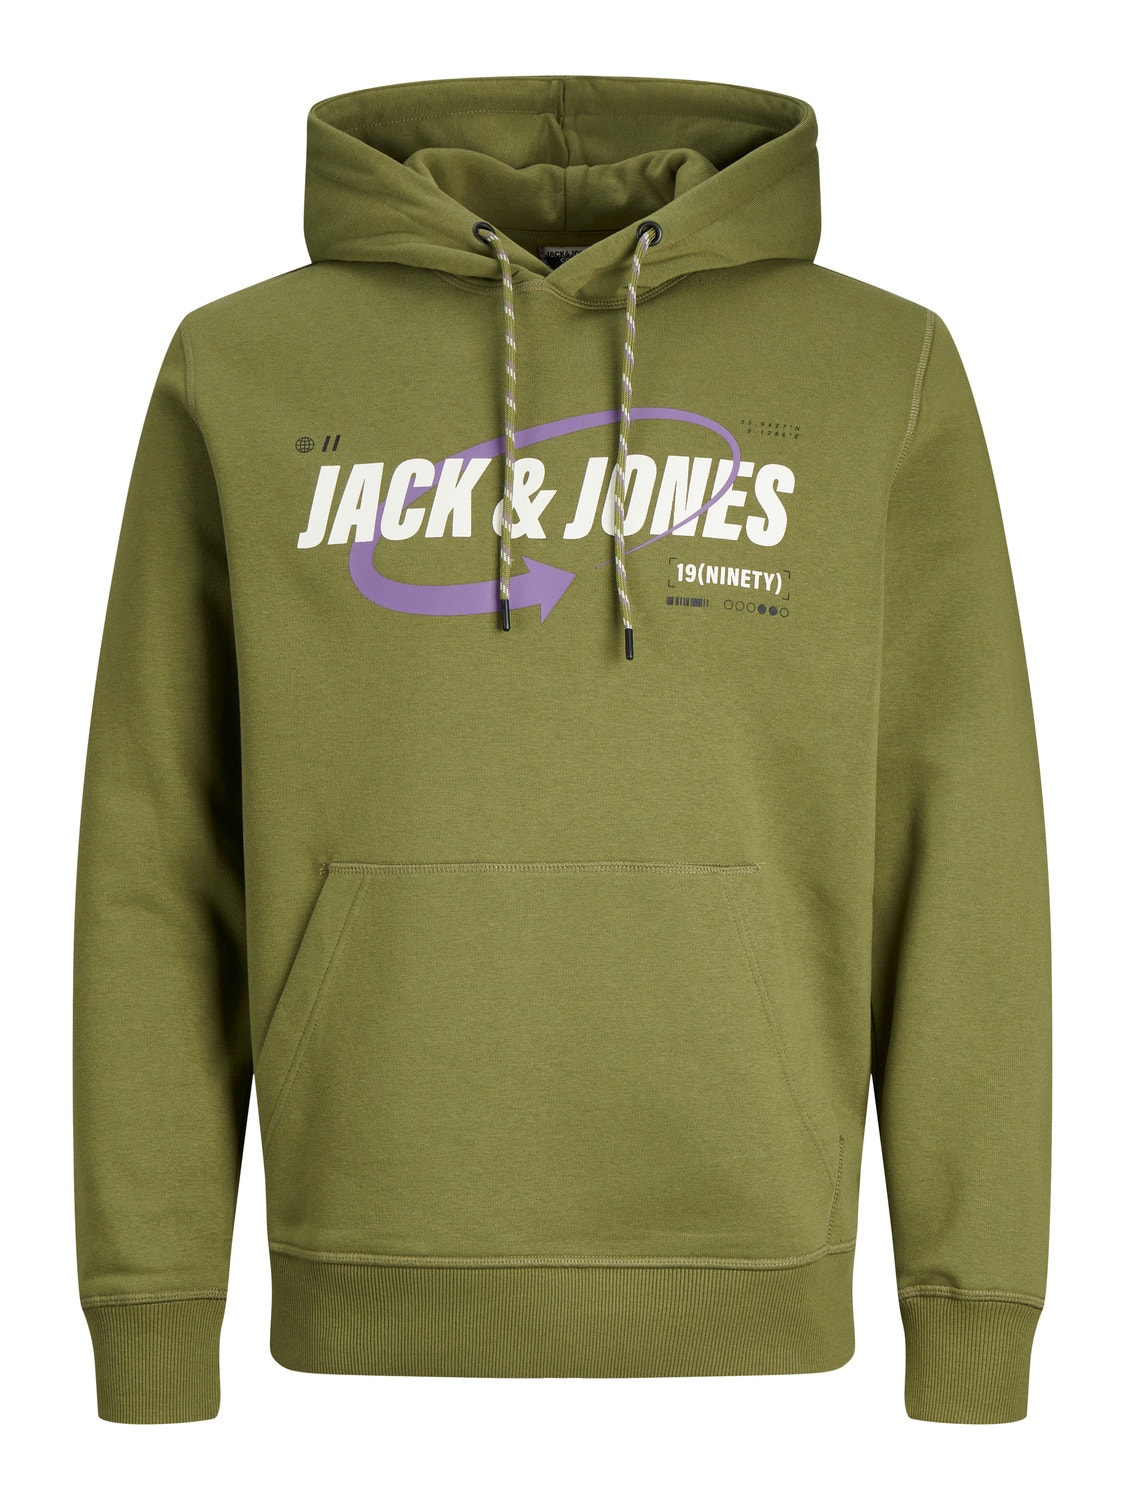 Jack & Jones Logo Huppari -Olive Branch - 12245714